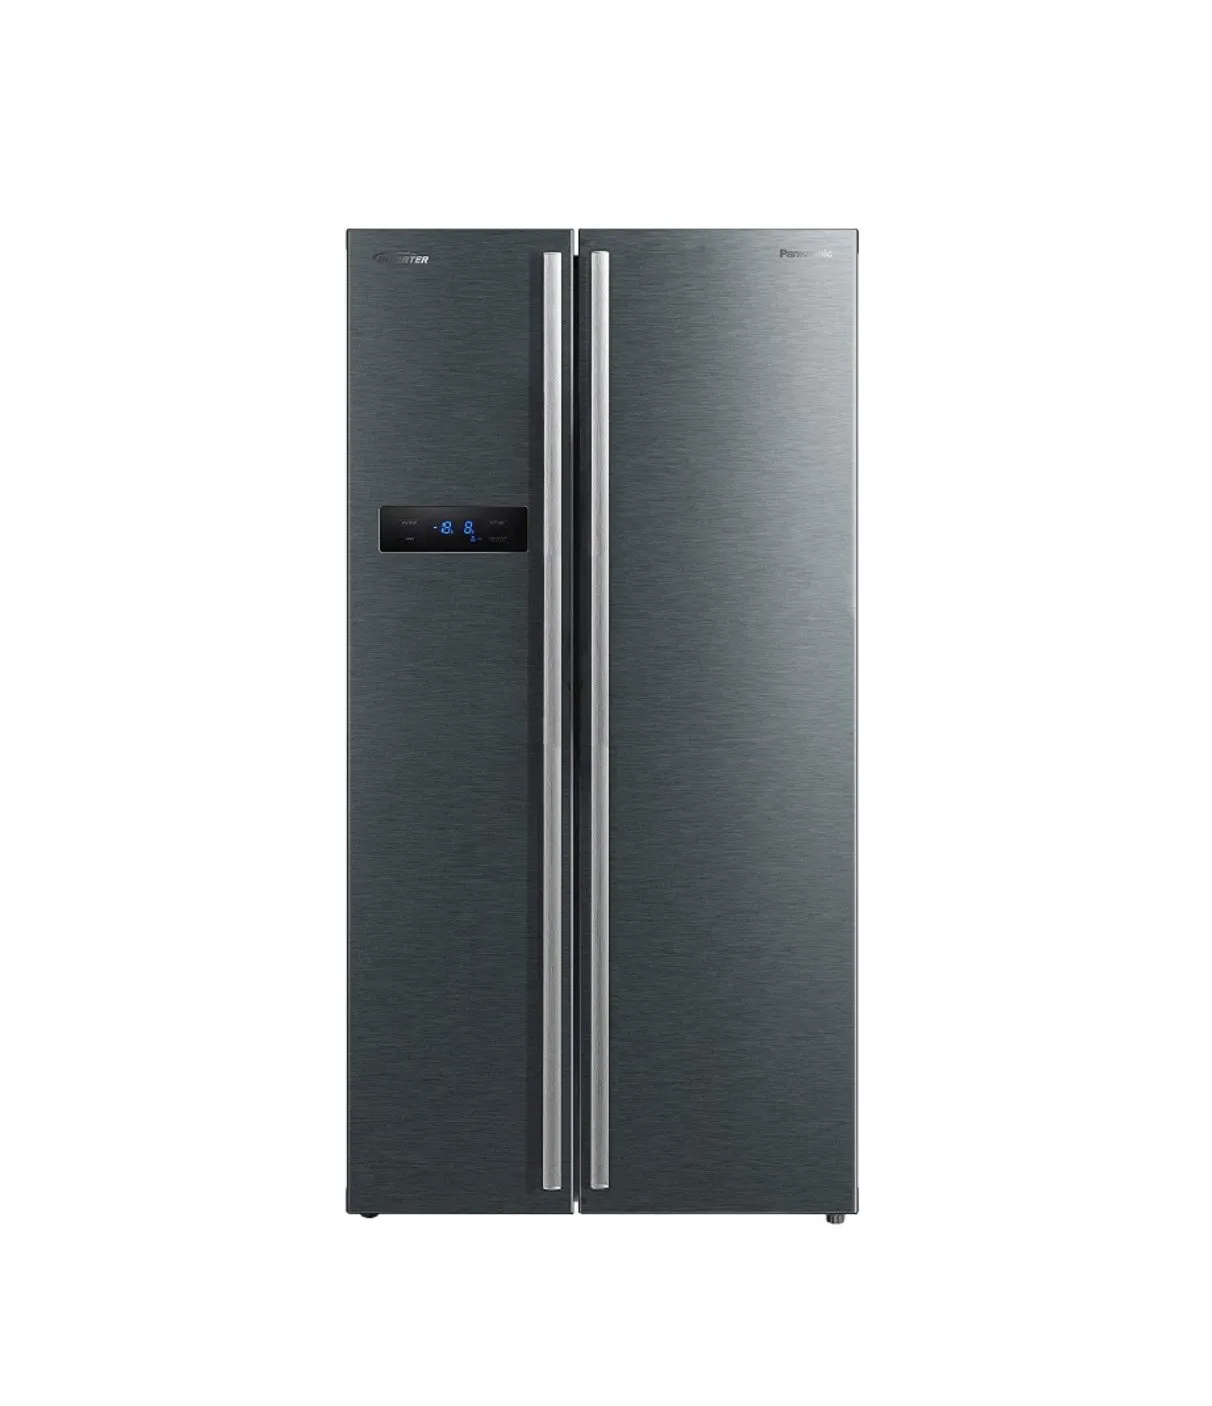 Panasonic 700 Liter Side By Side Refrigerator Dark Grey Model NRBS700MS | 1 Year Full 10 Year Compressor Warranty.